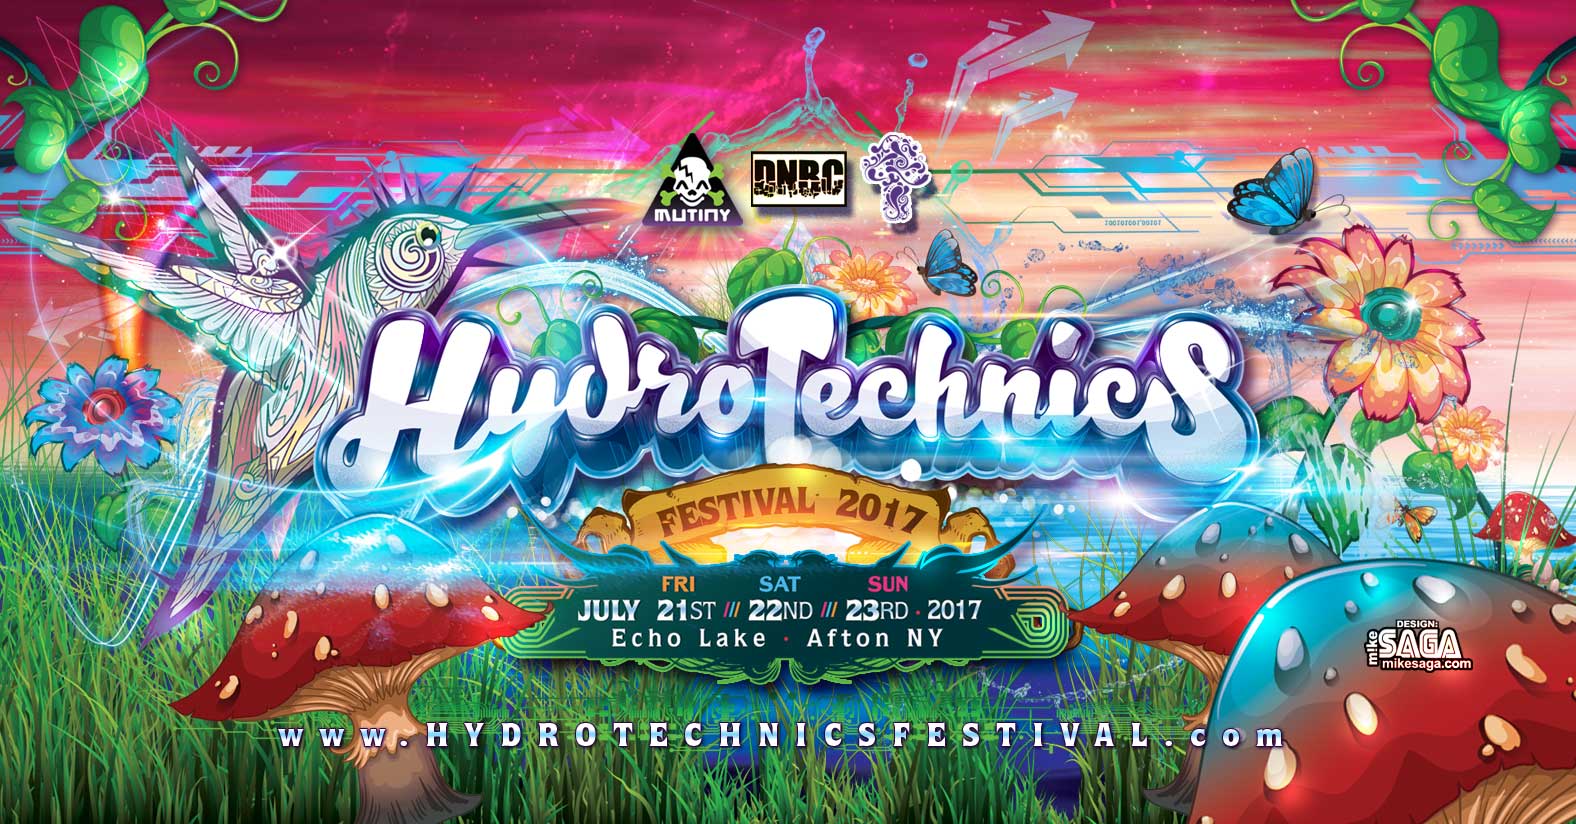 Hydrotechnics Festival 2017